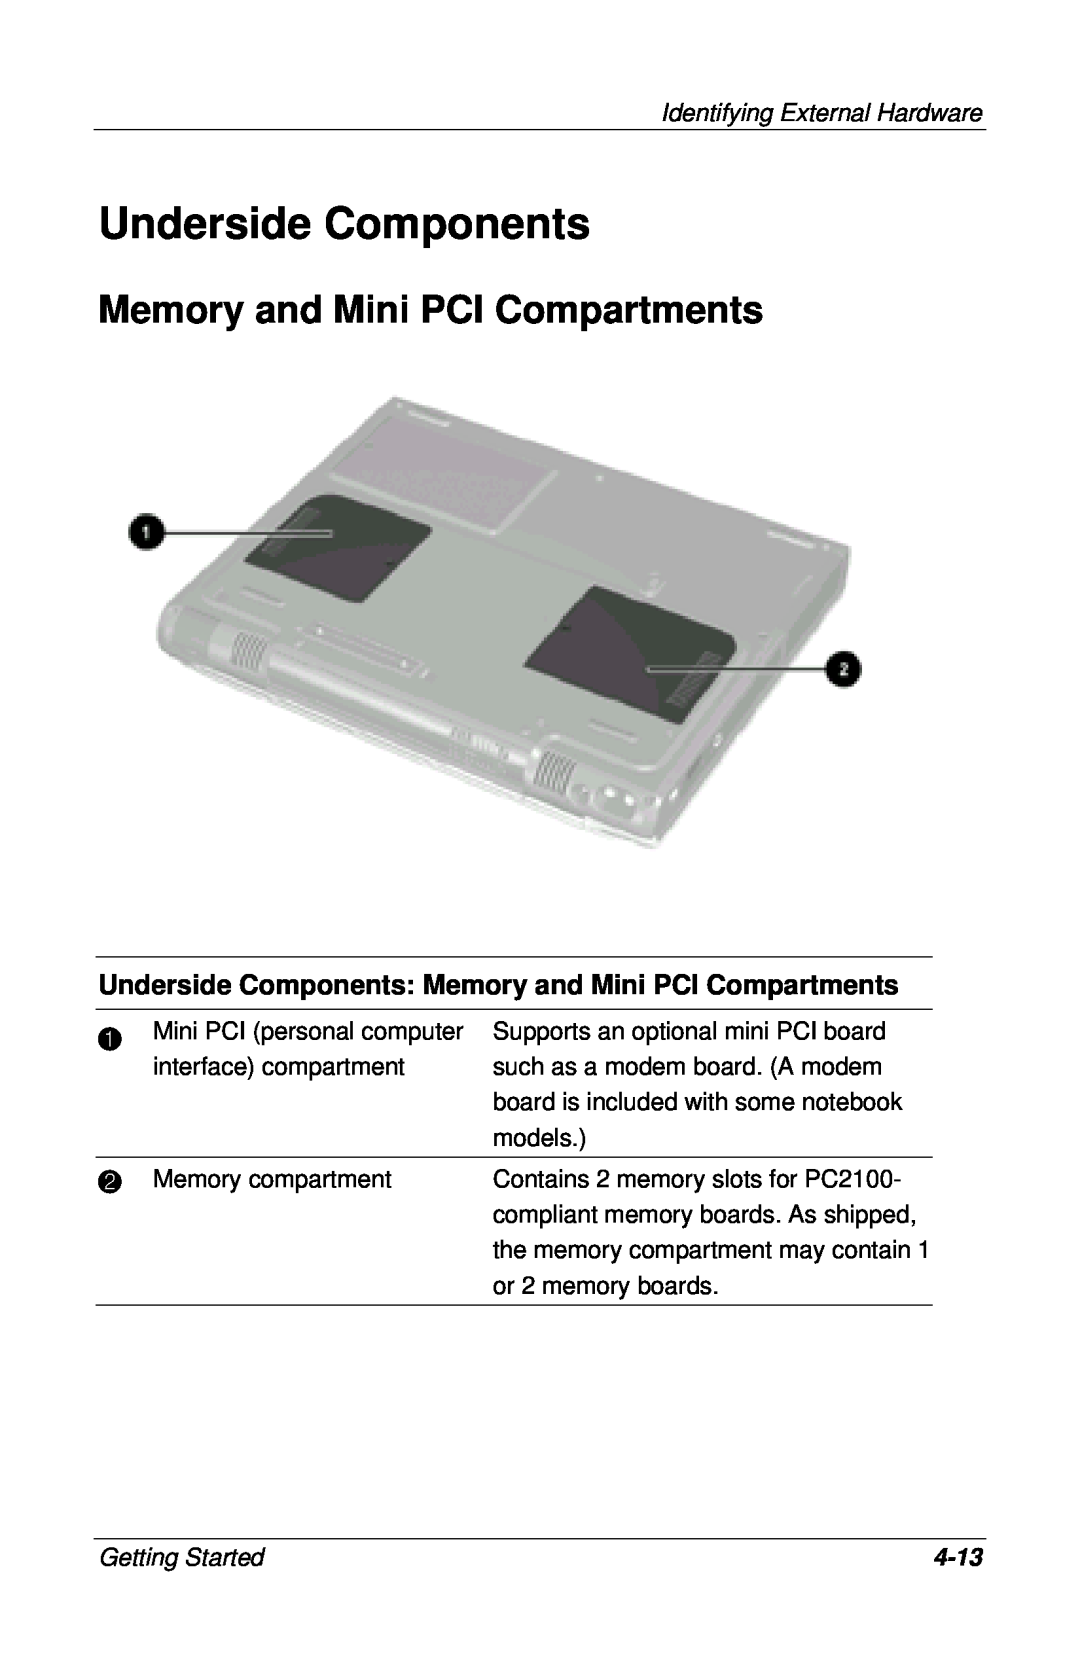 HP 915CA, 955AP, 950AP, 943AP, 945AP, 940AP, 935AP, 927AP Underside Components Memory and Mini PCI Compartments, 4-13 